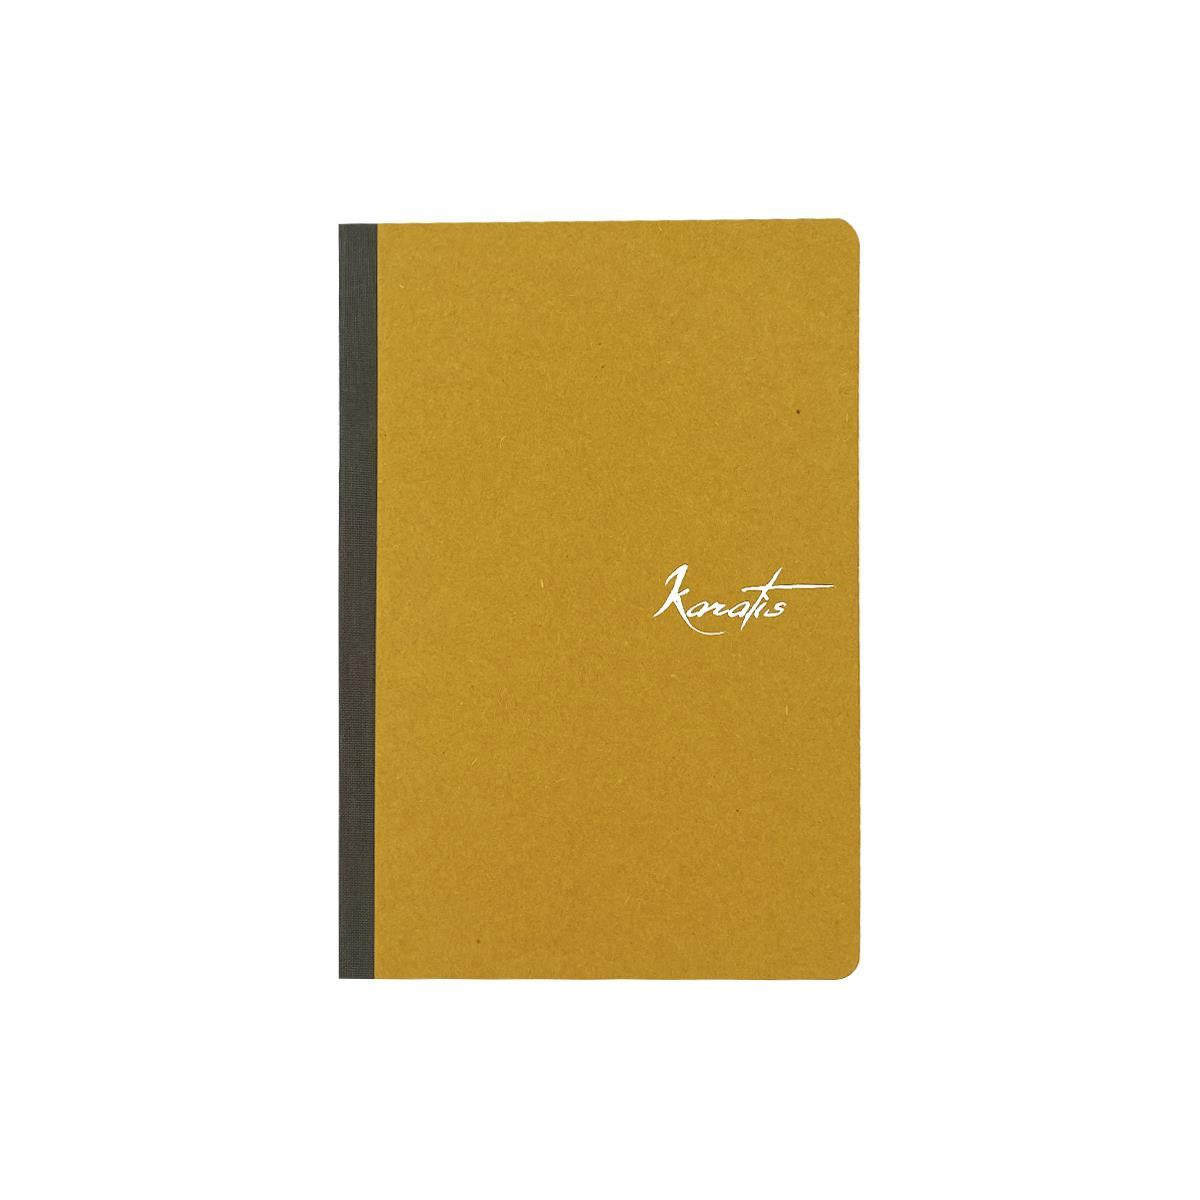 Karatis Amber Tomoe River Paper Notebook